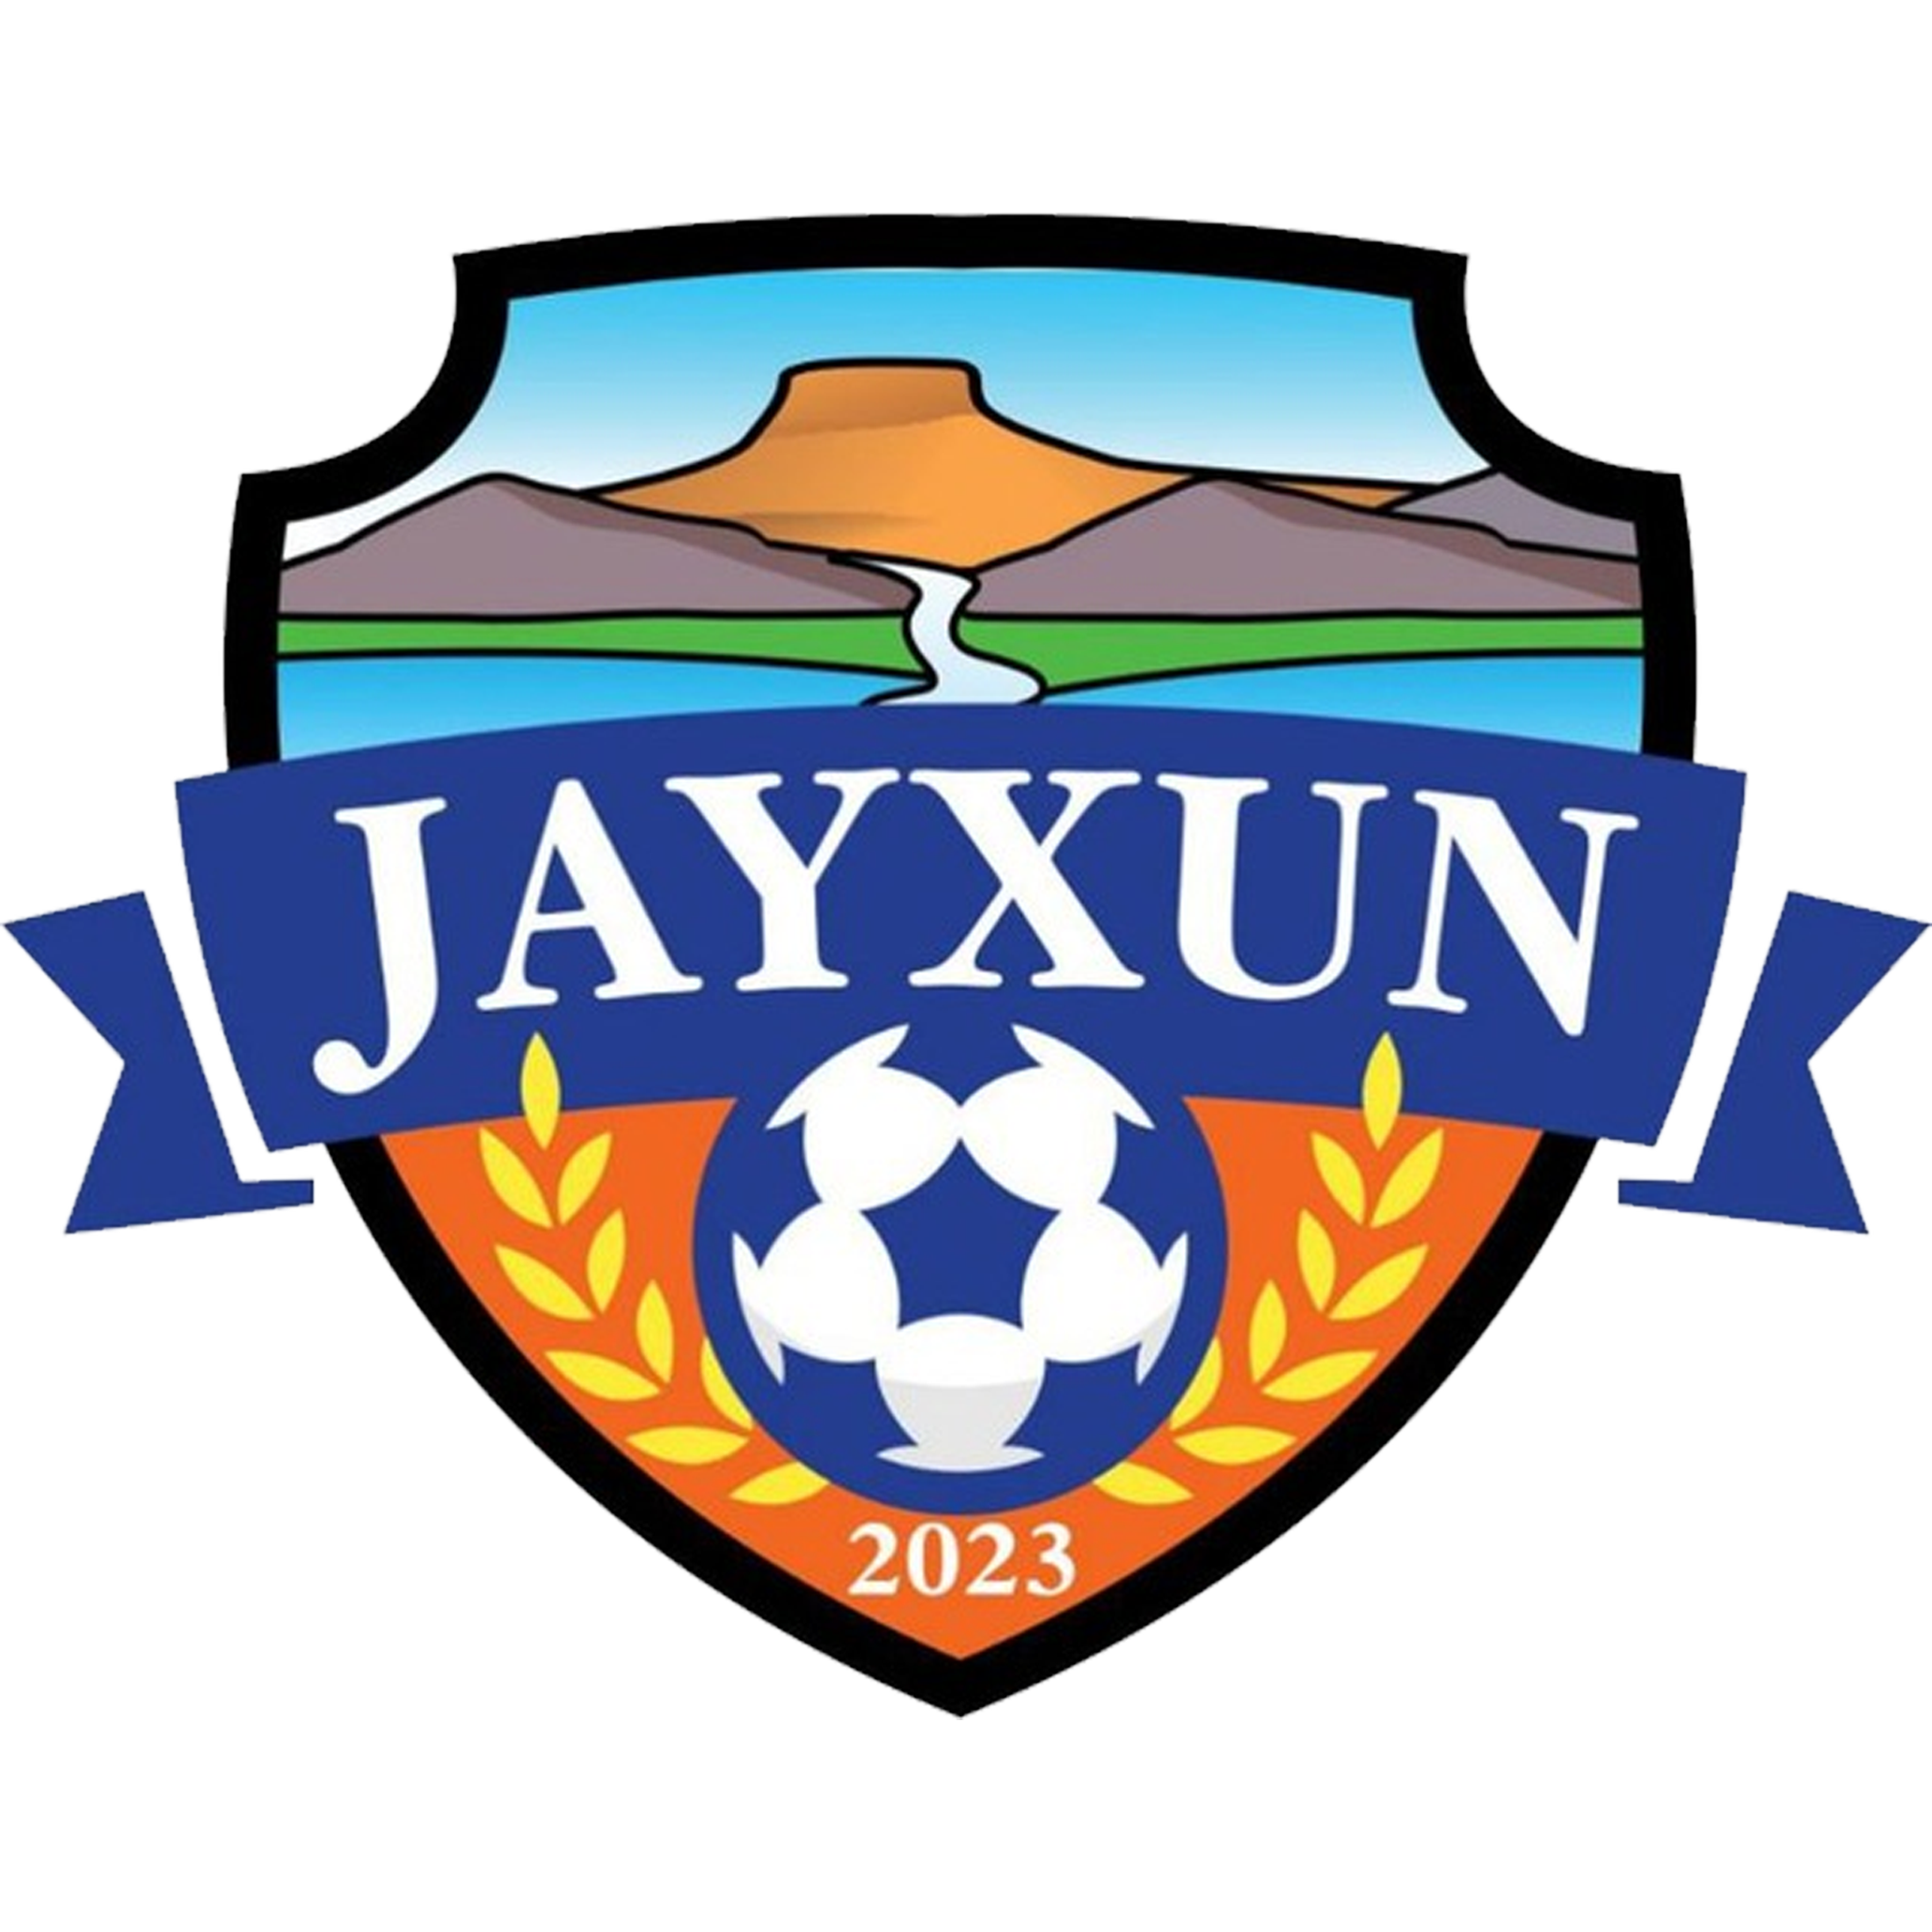 Jayxun-2023